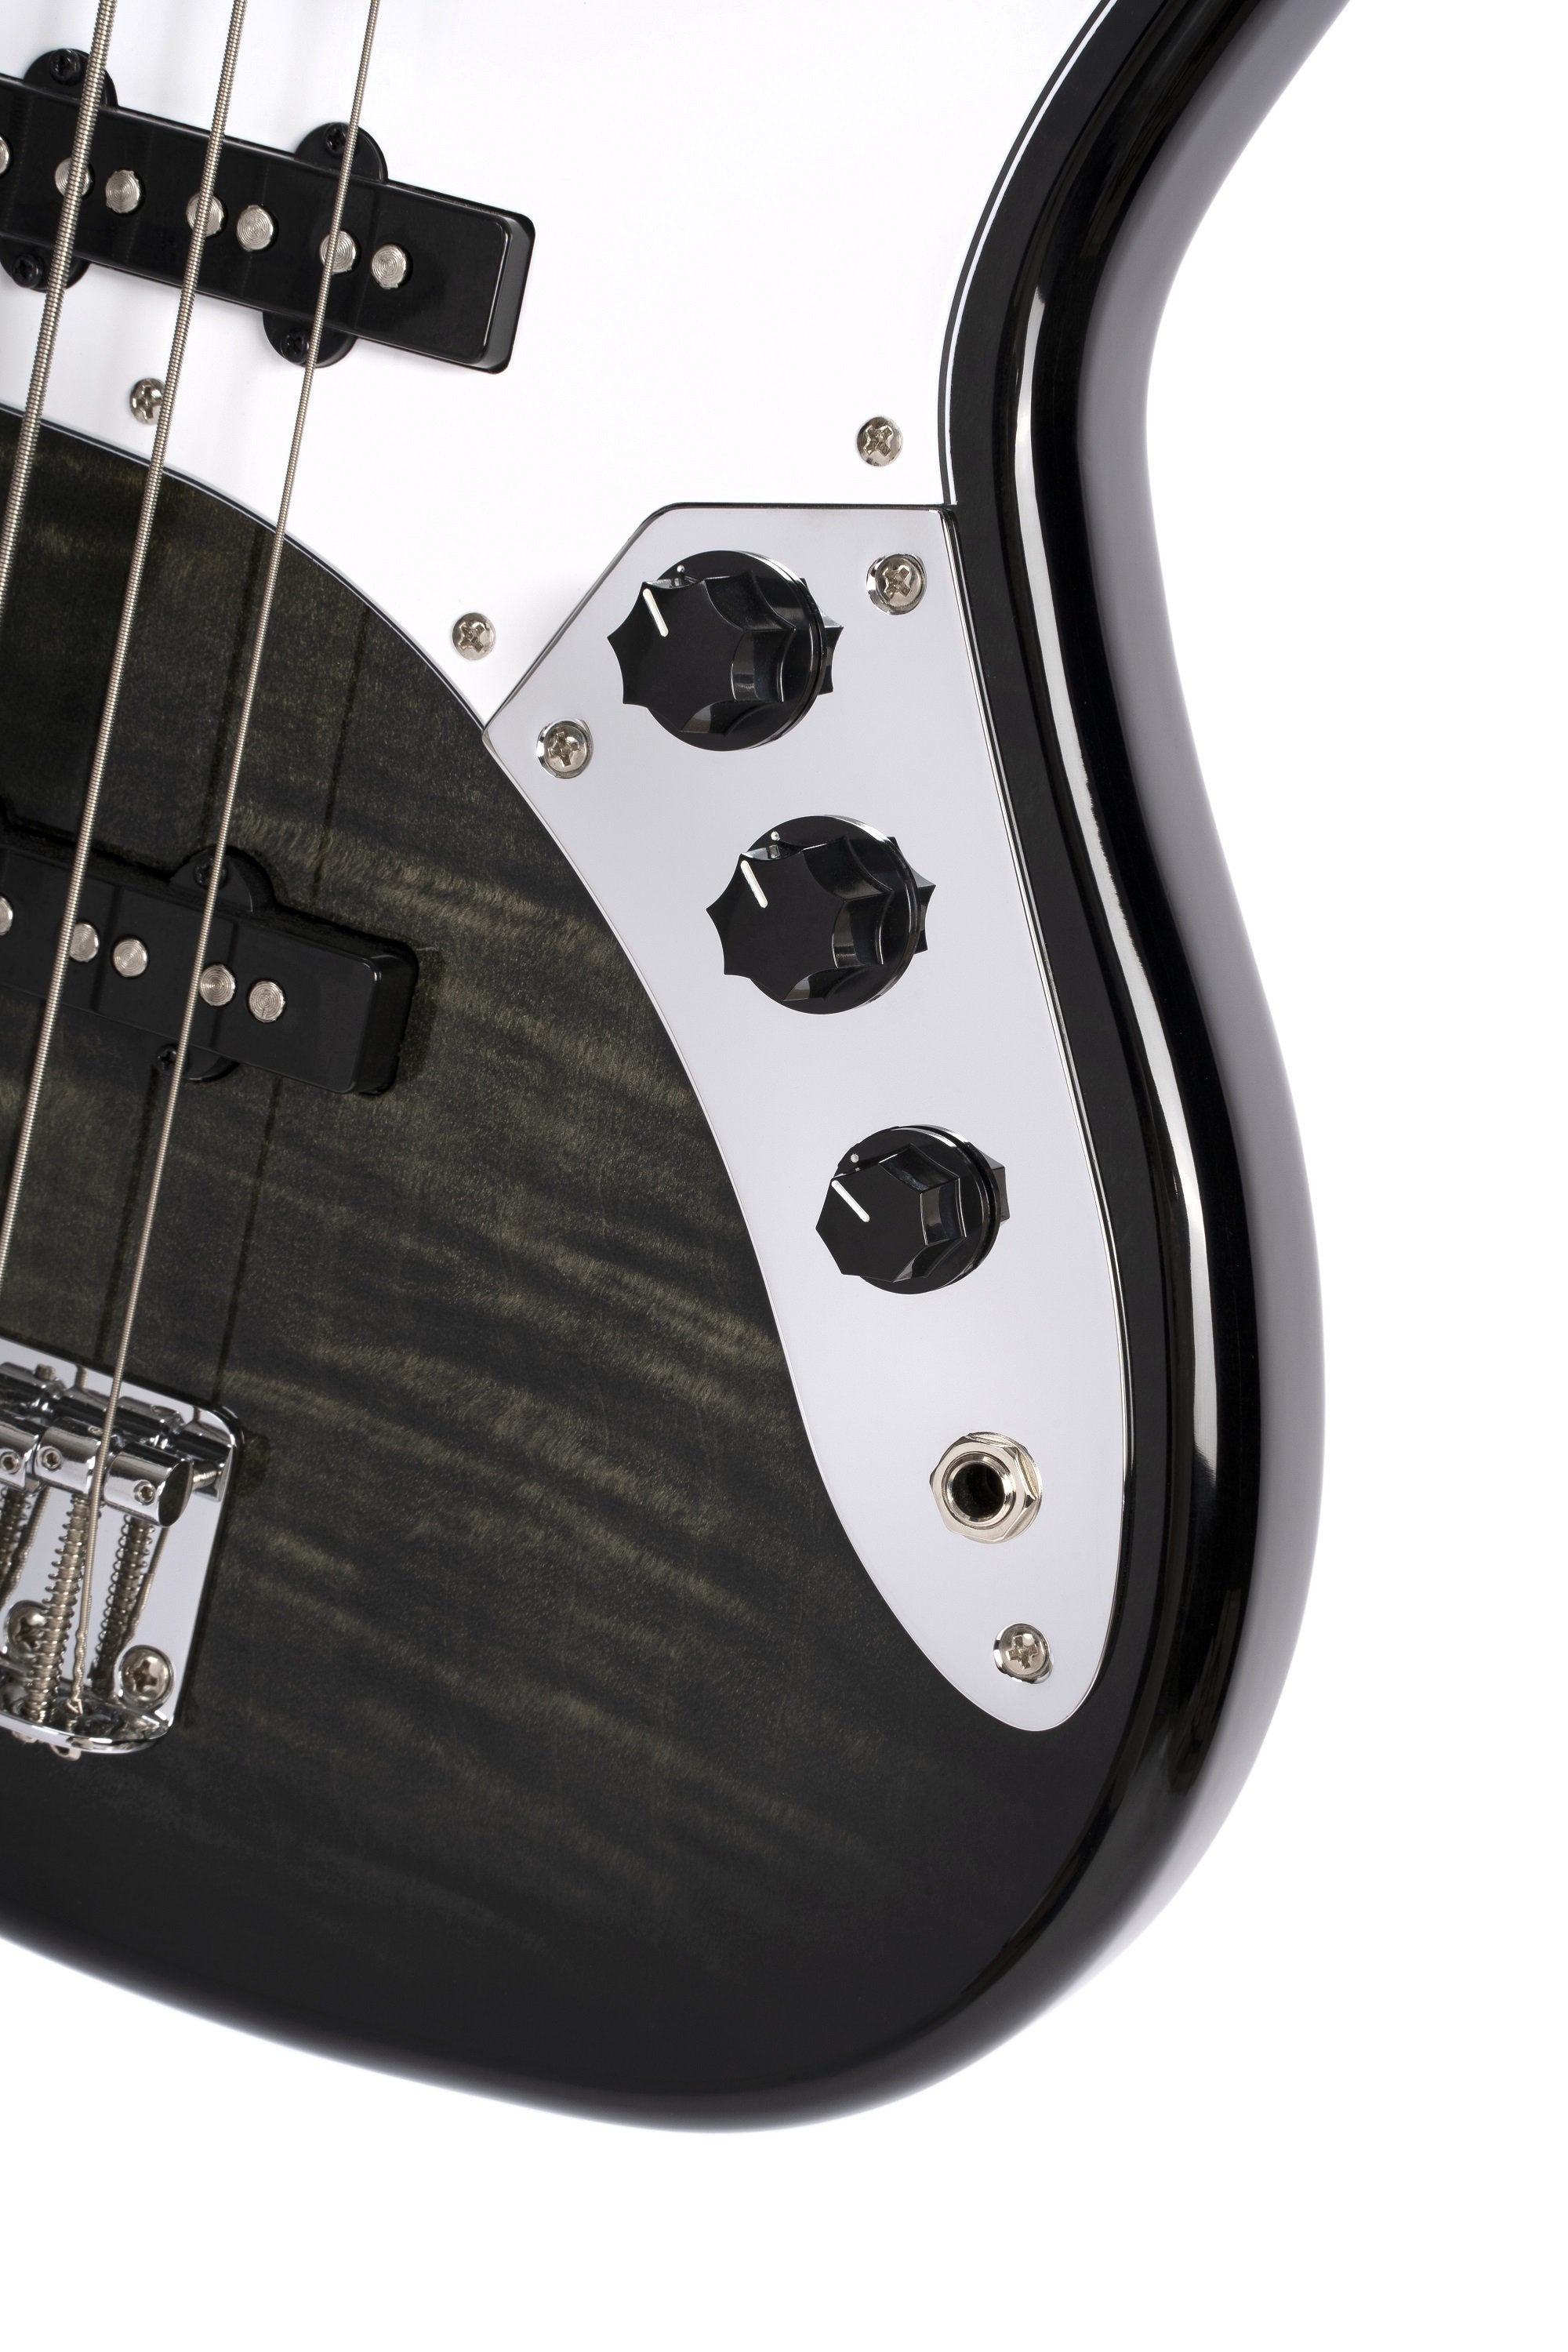 Cort GB24JJ Trans Black, Bass Guitar for sale at Richards Guitars.